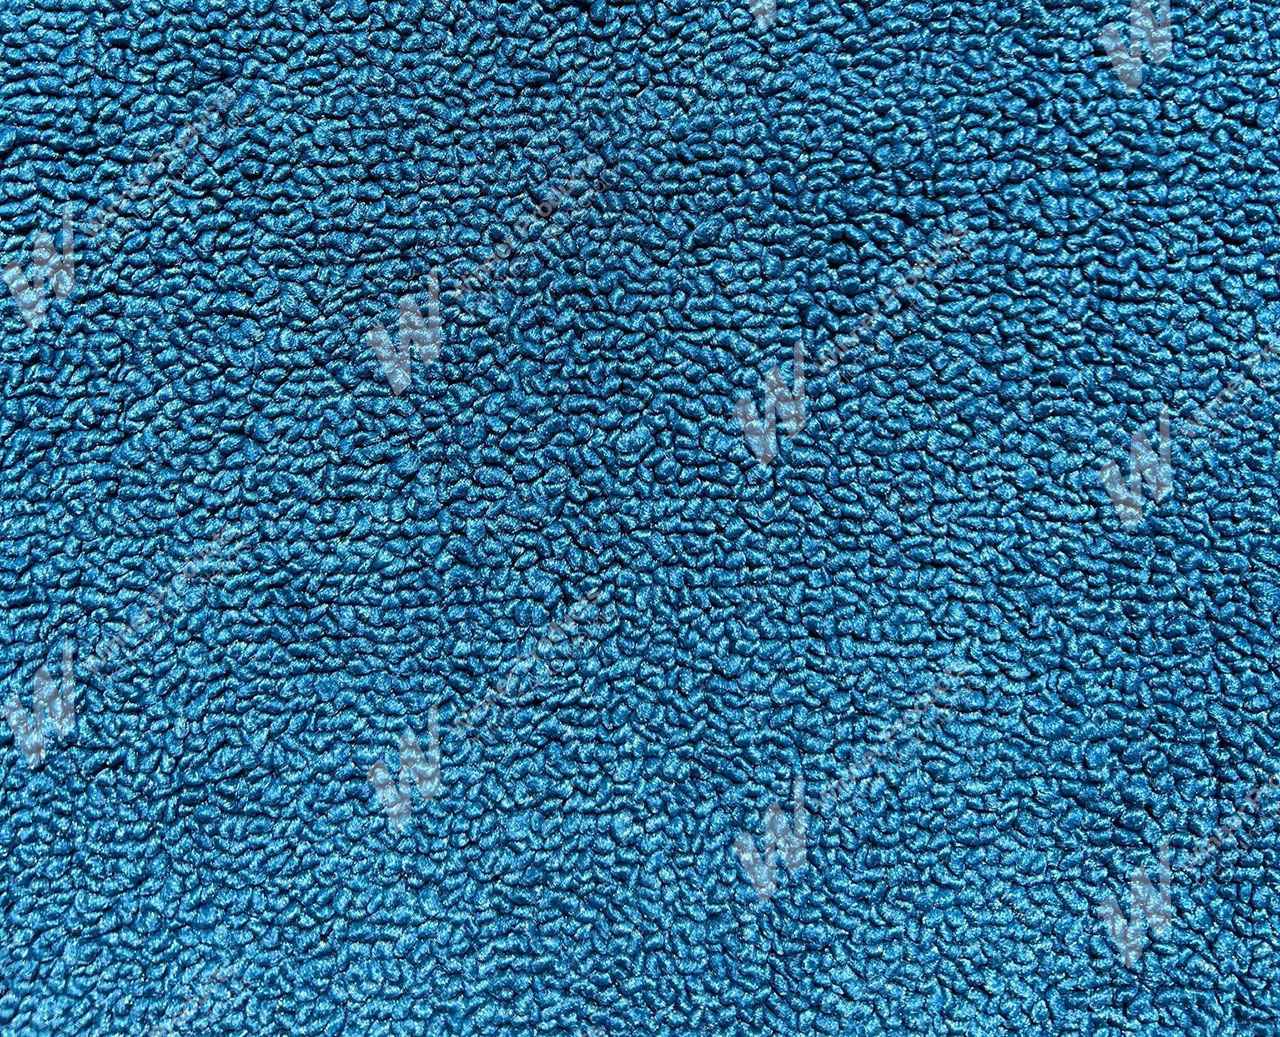 Holden Kingswood HT Kingswood Wagon 14G Twilight Blue & Castillion Weave Carpet (Image 1 of 1)